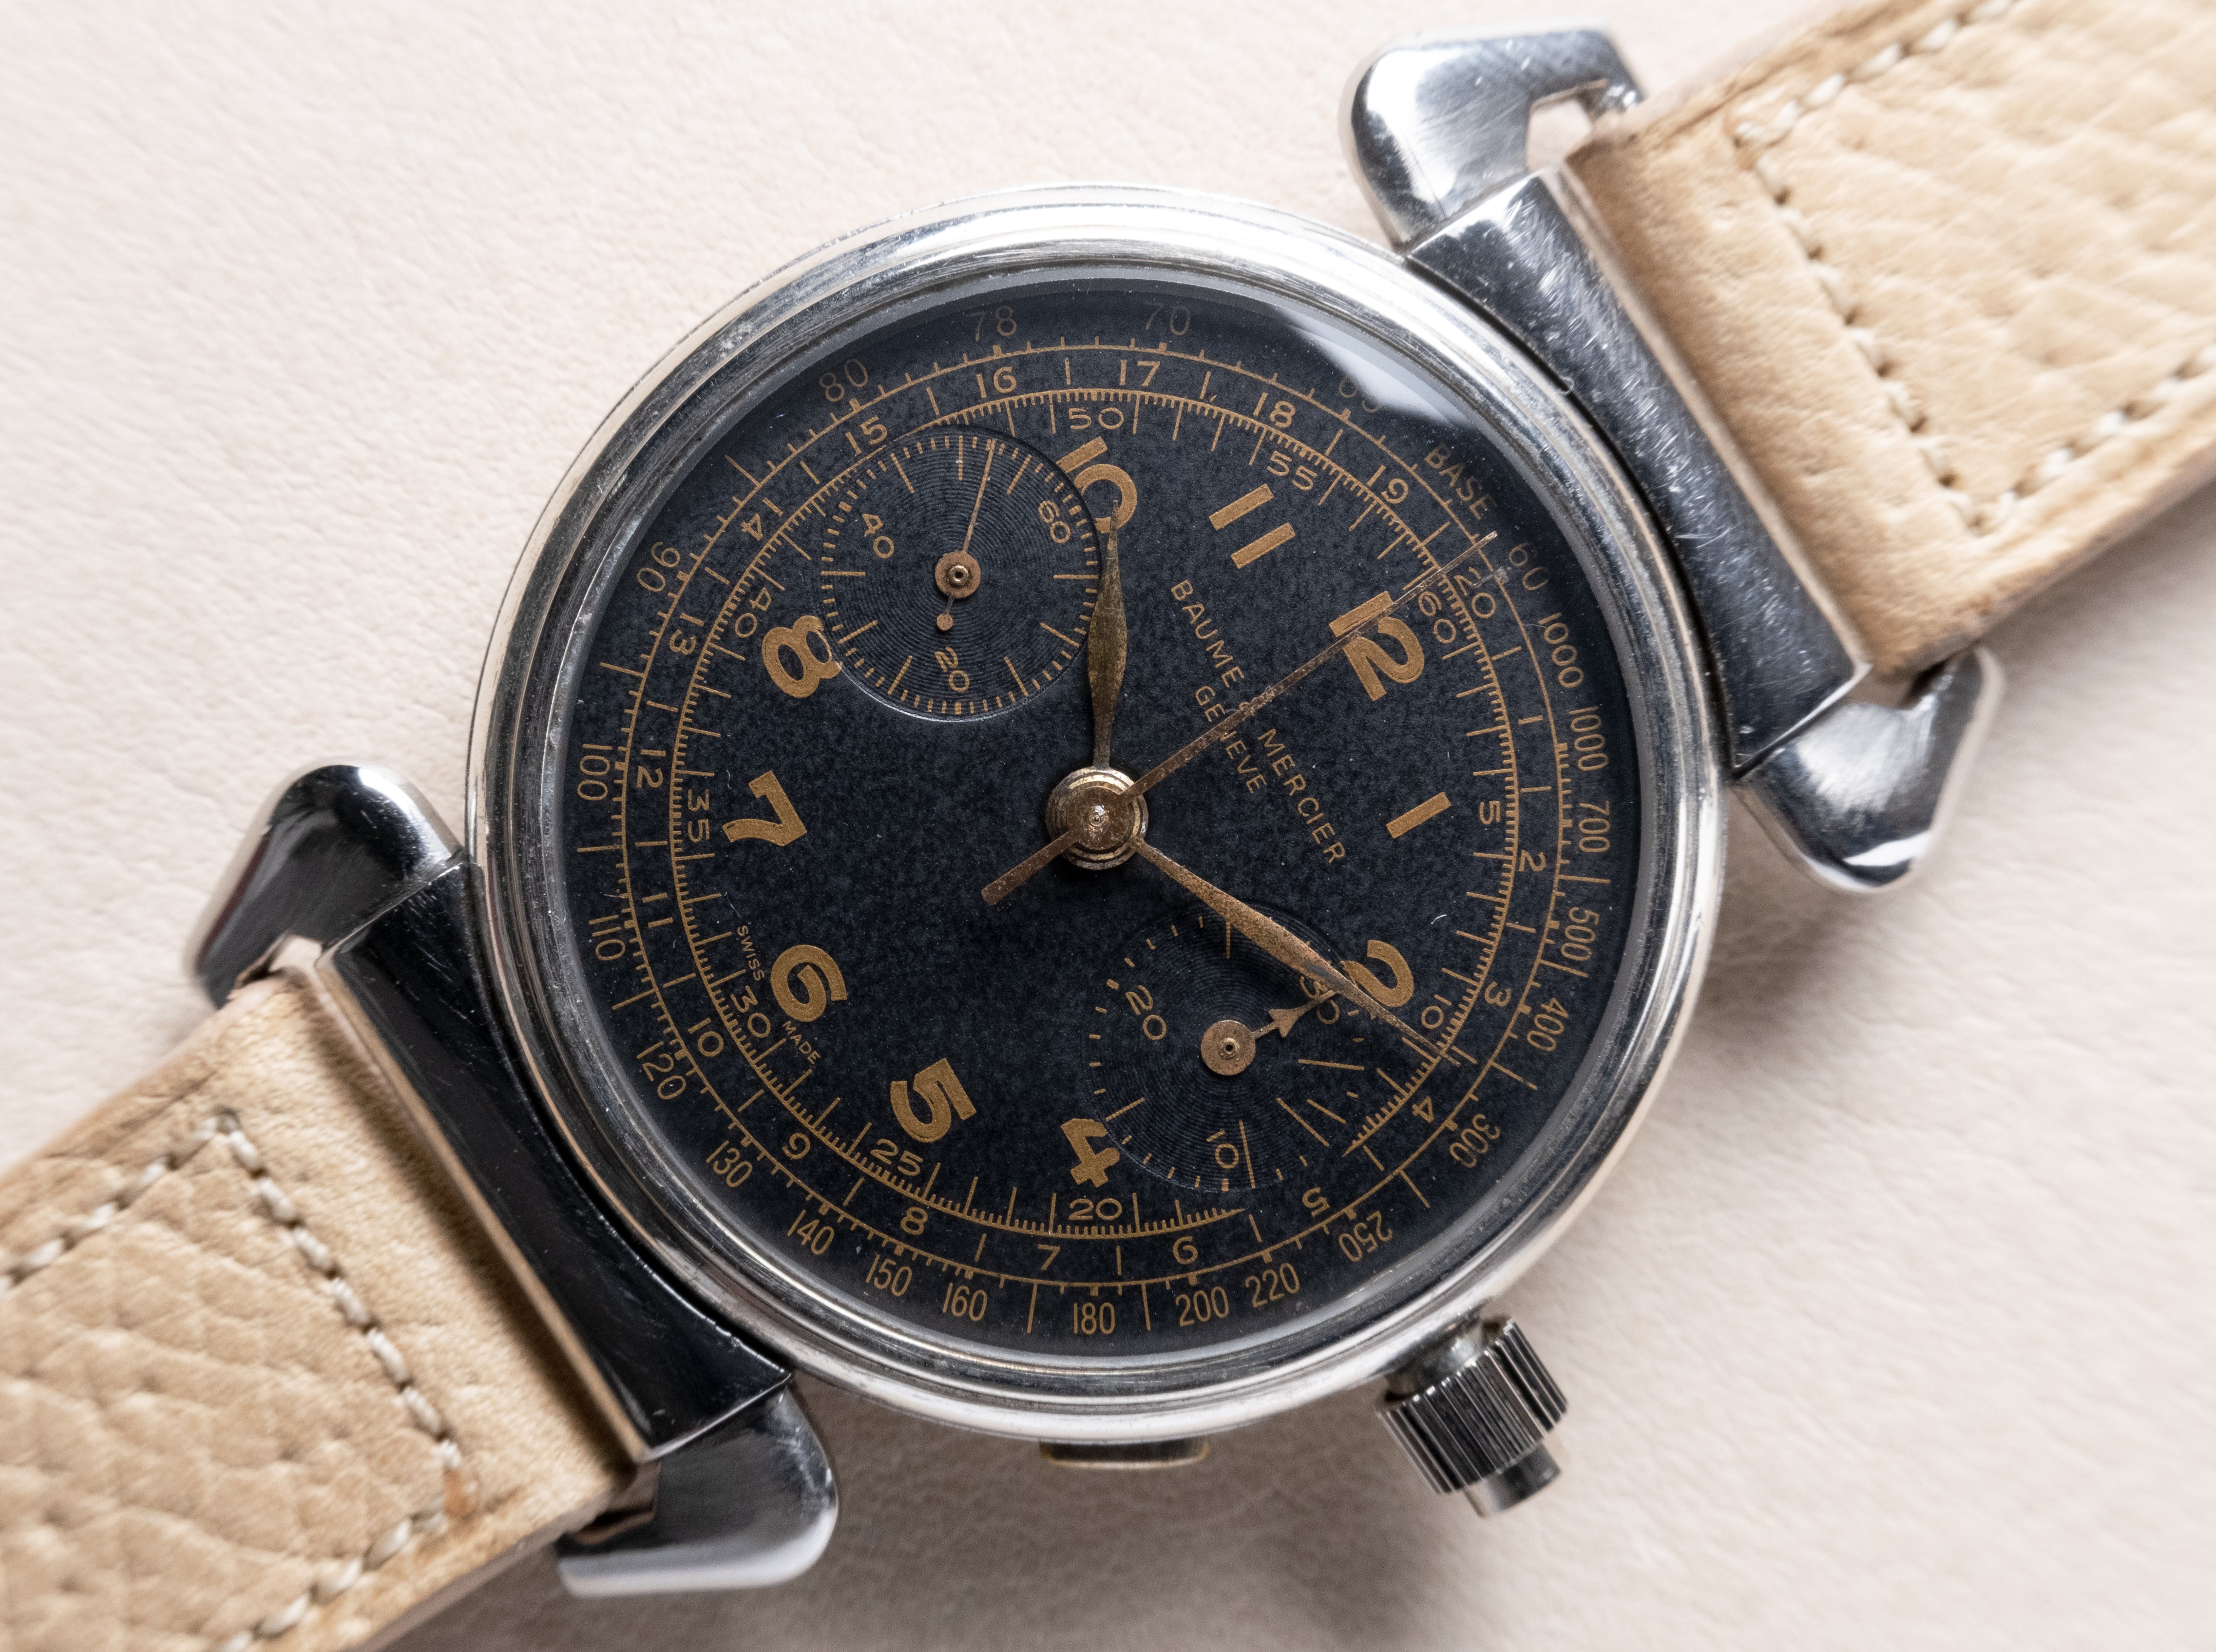 Baume & Mercier Black Dial Chronograph Hooded Lugs (1940s)